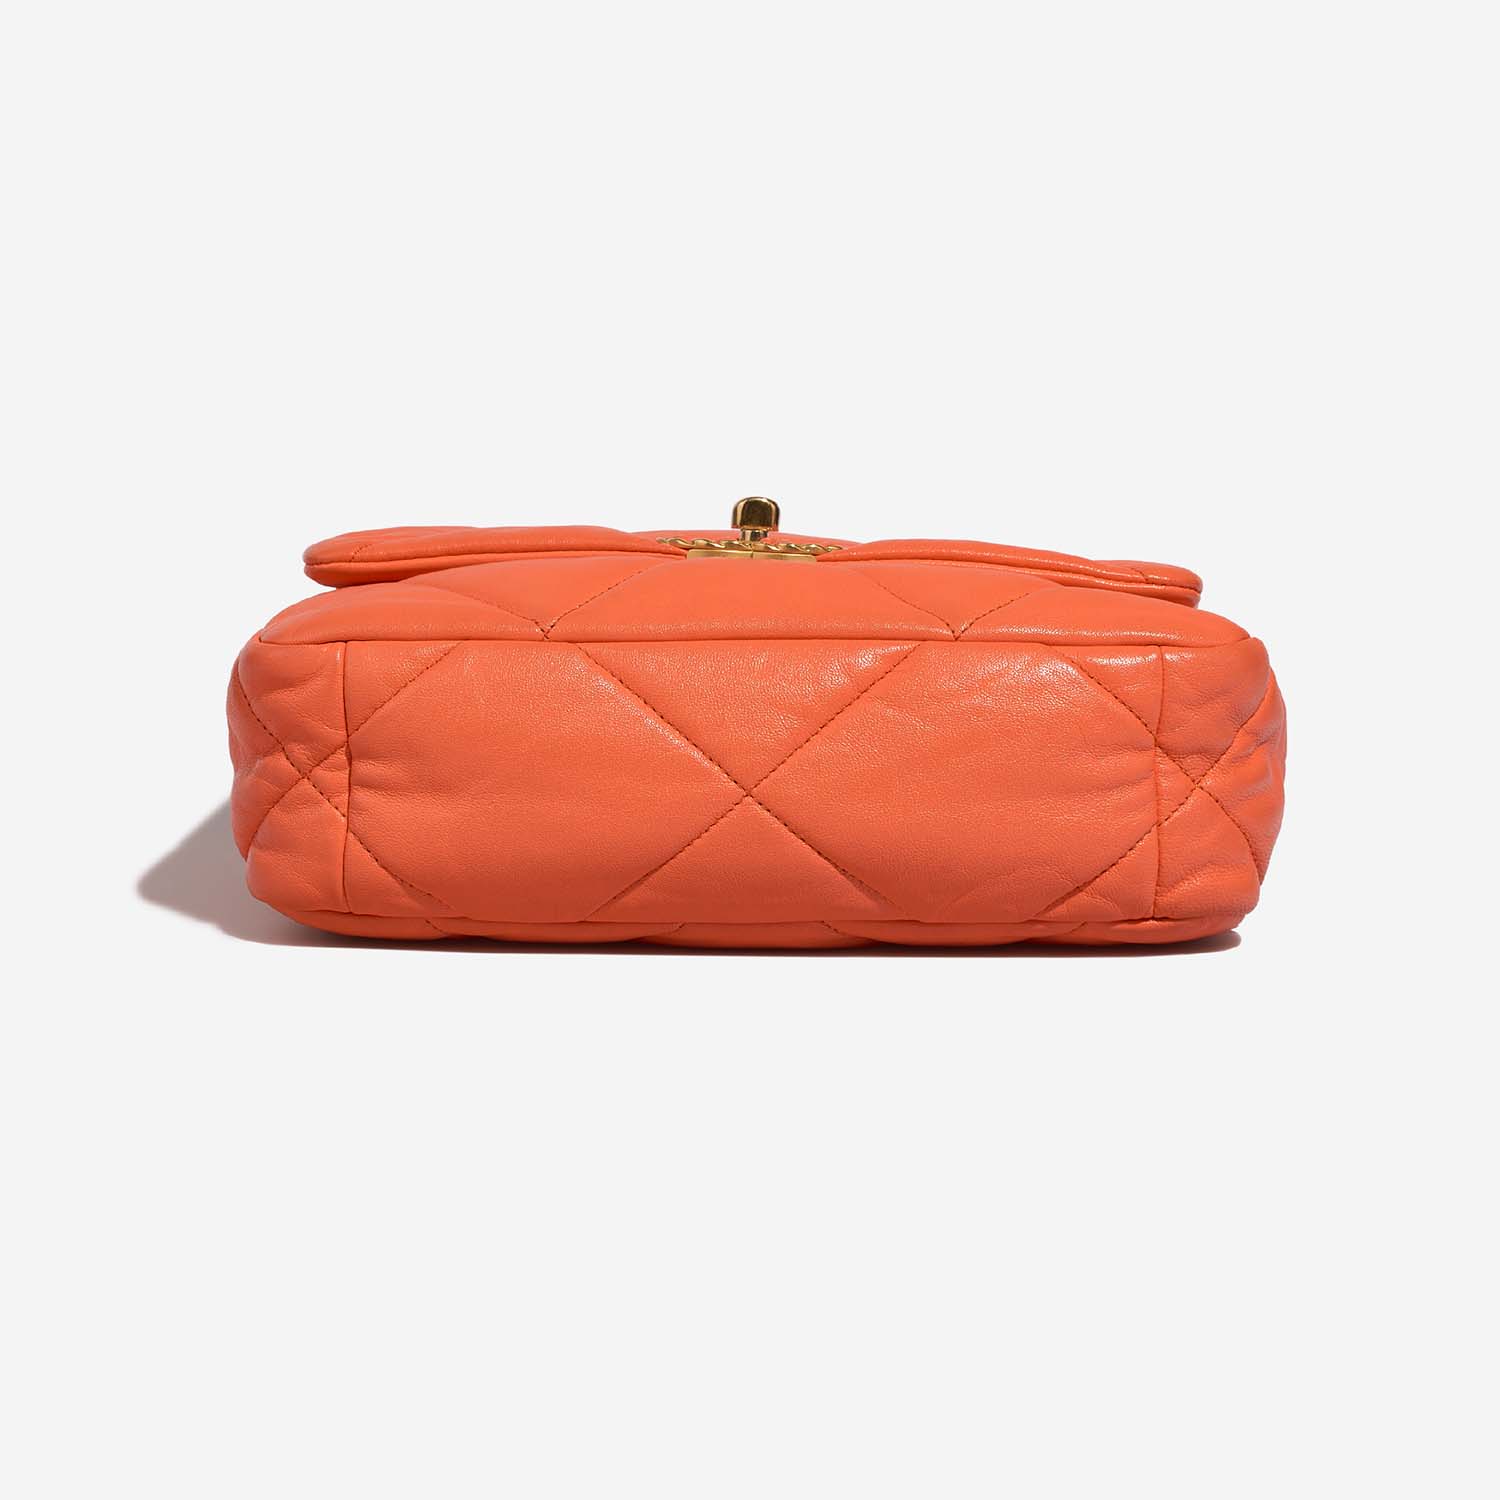 Chanel 19 Waist Bag - Orange